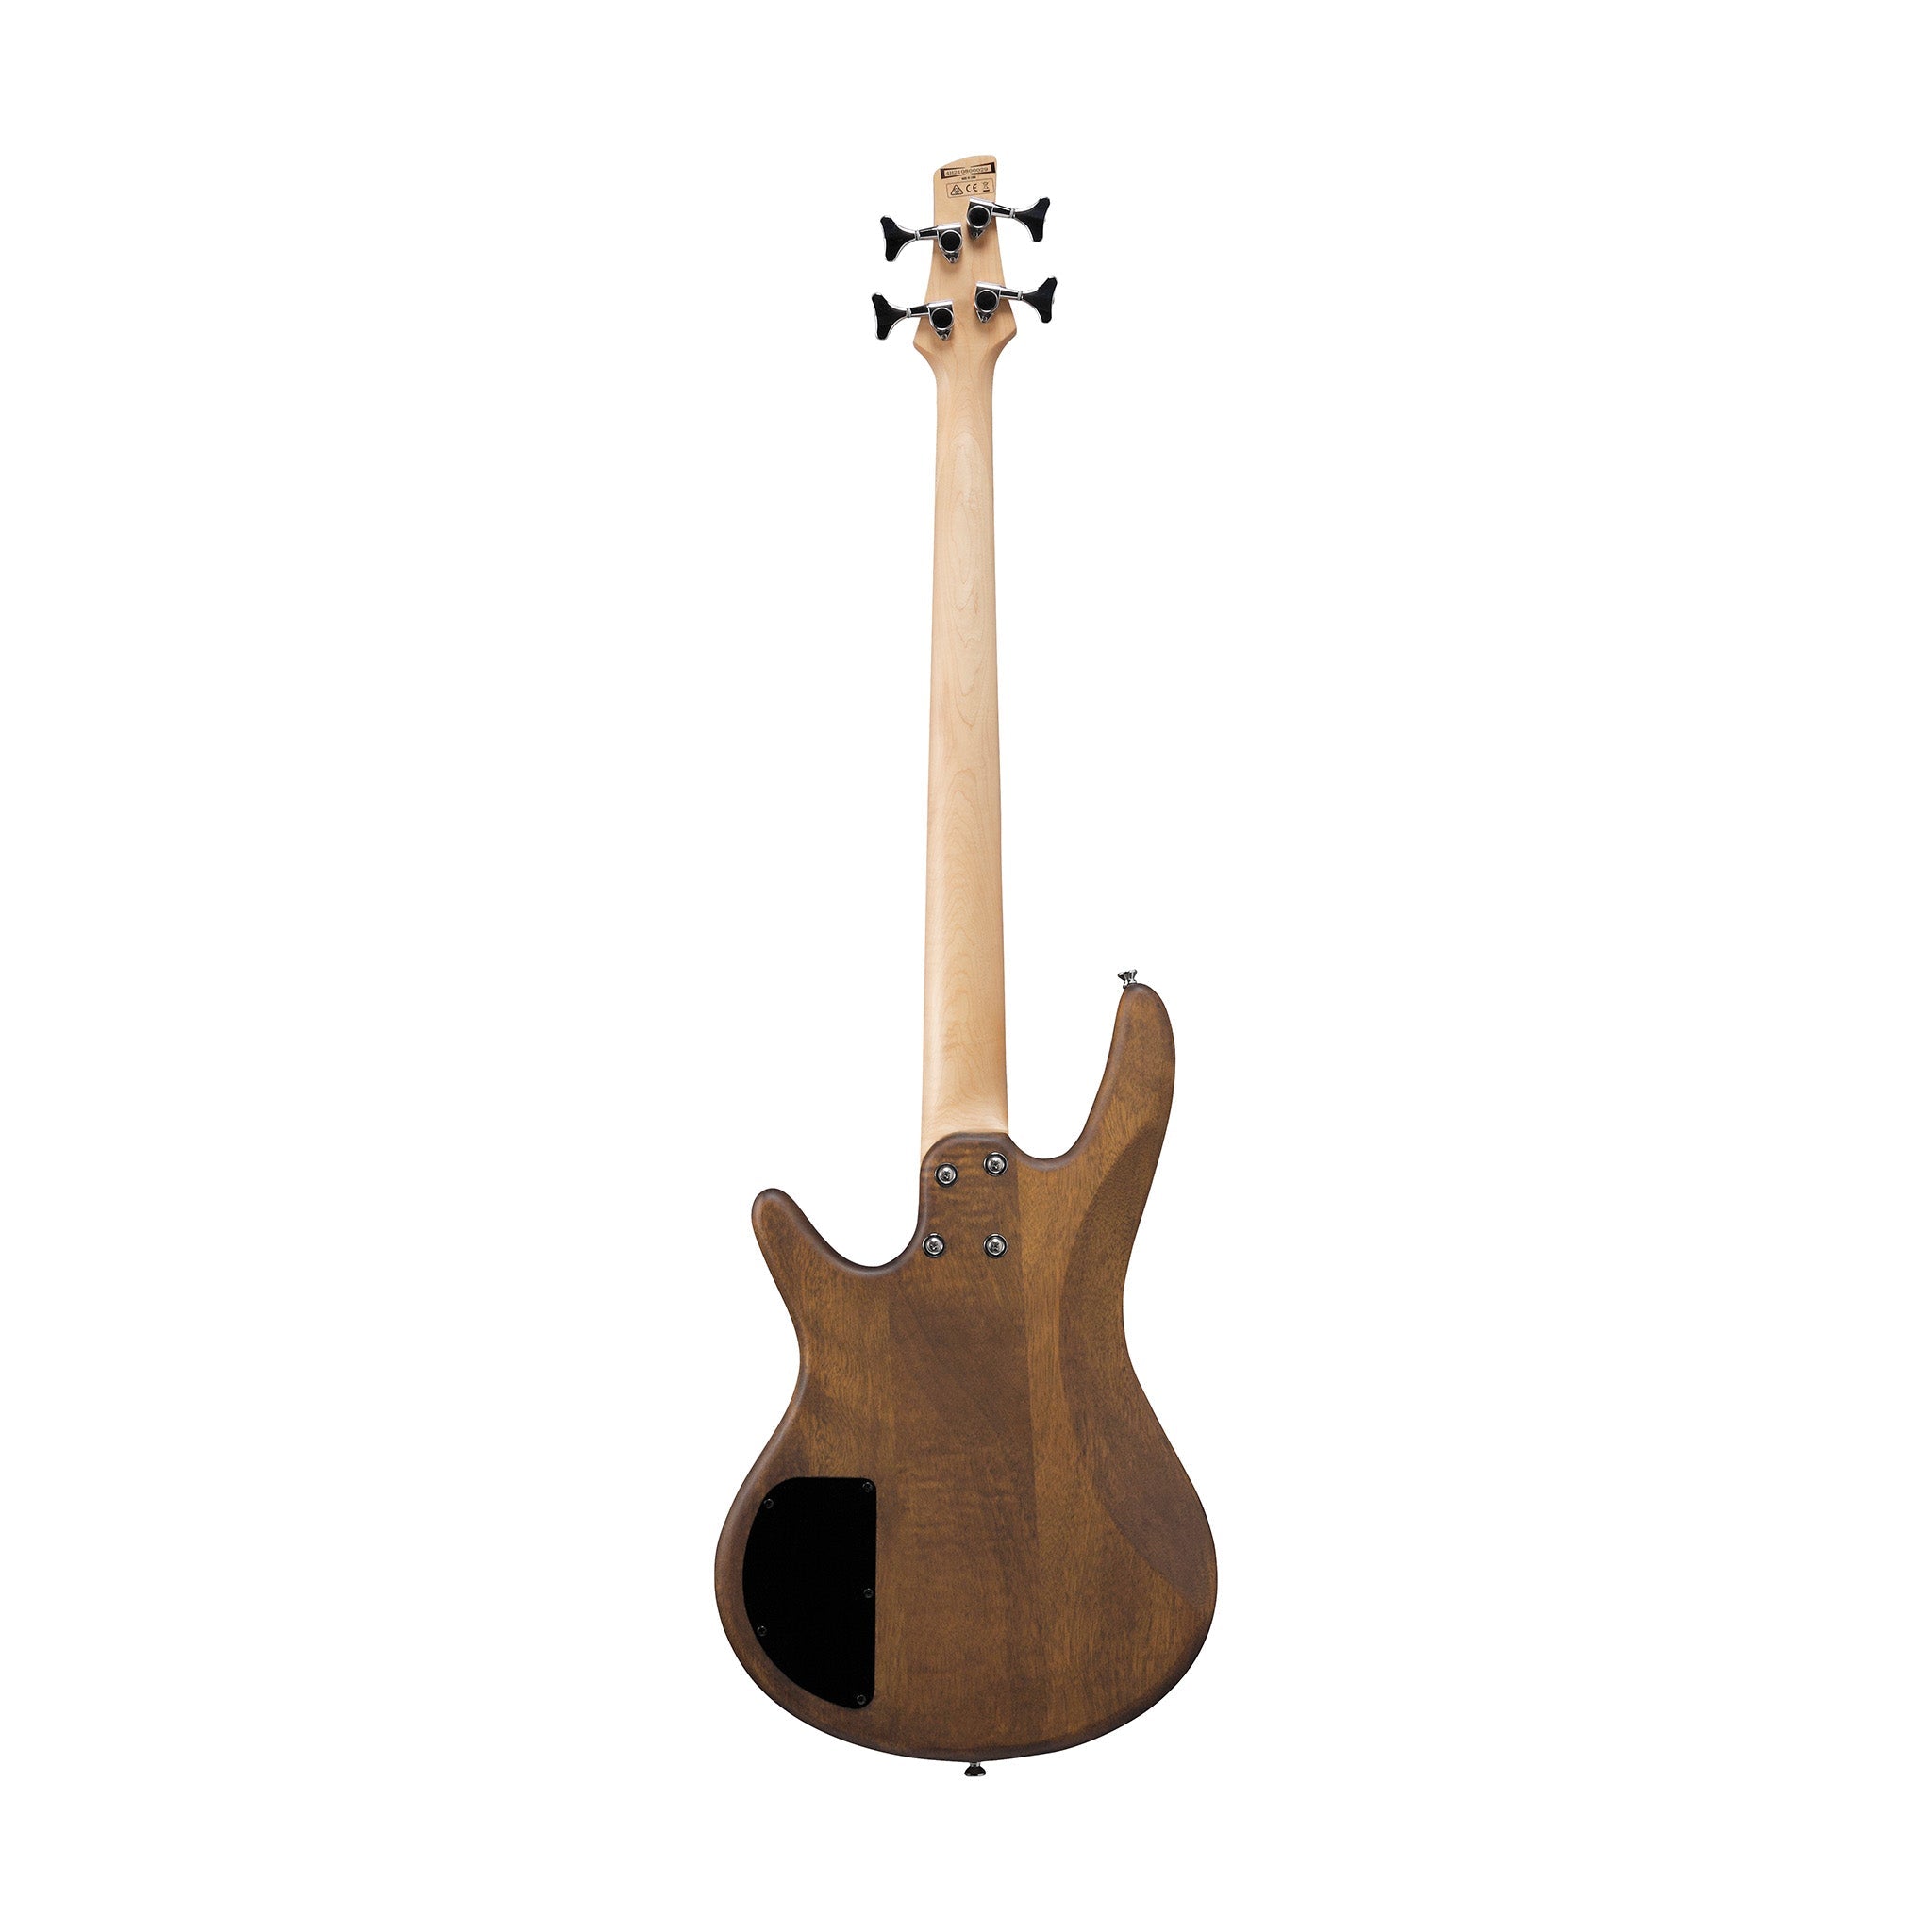 Ibanez Gsr180-lbf Gio Sr Series Electric Bass, Transparent Light Brown Flat